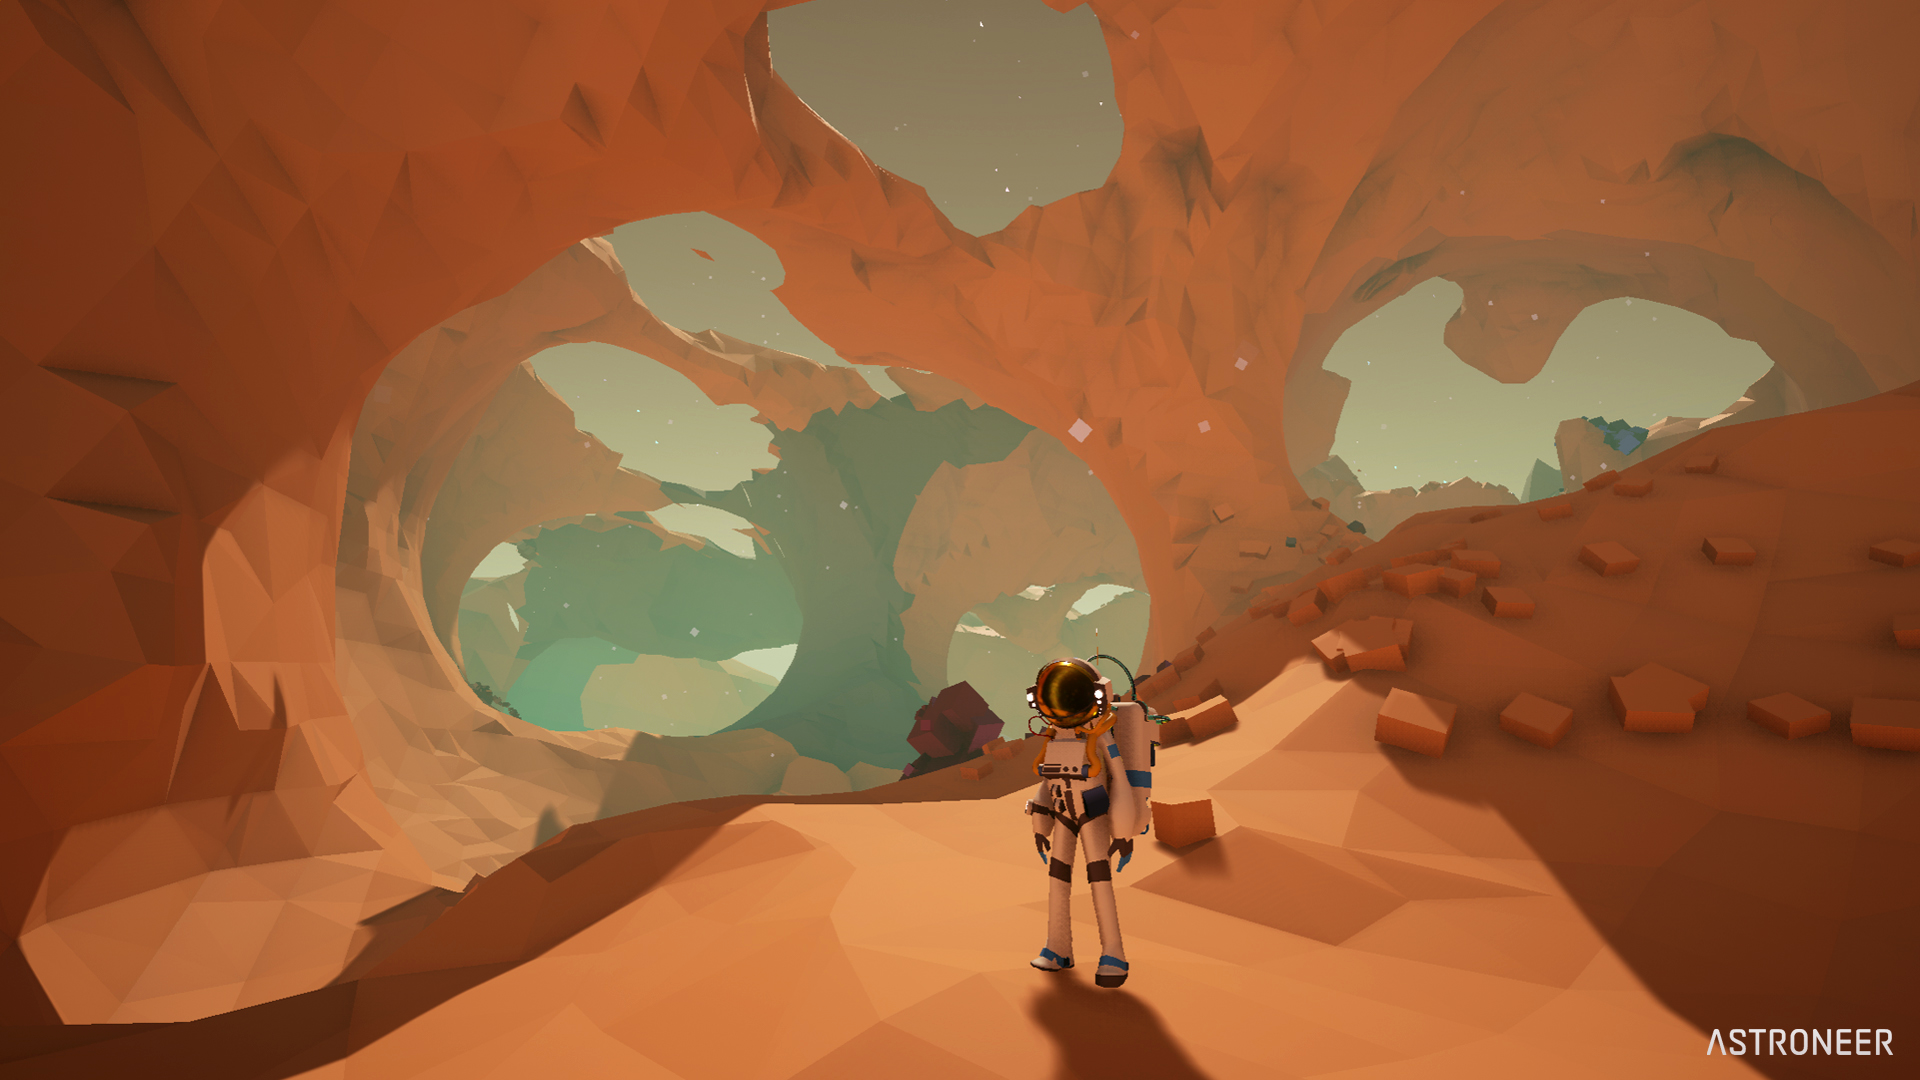 HD desktop wallpaper of an ASTRONEER character exploring a cavernous Martian landscape.